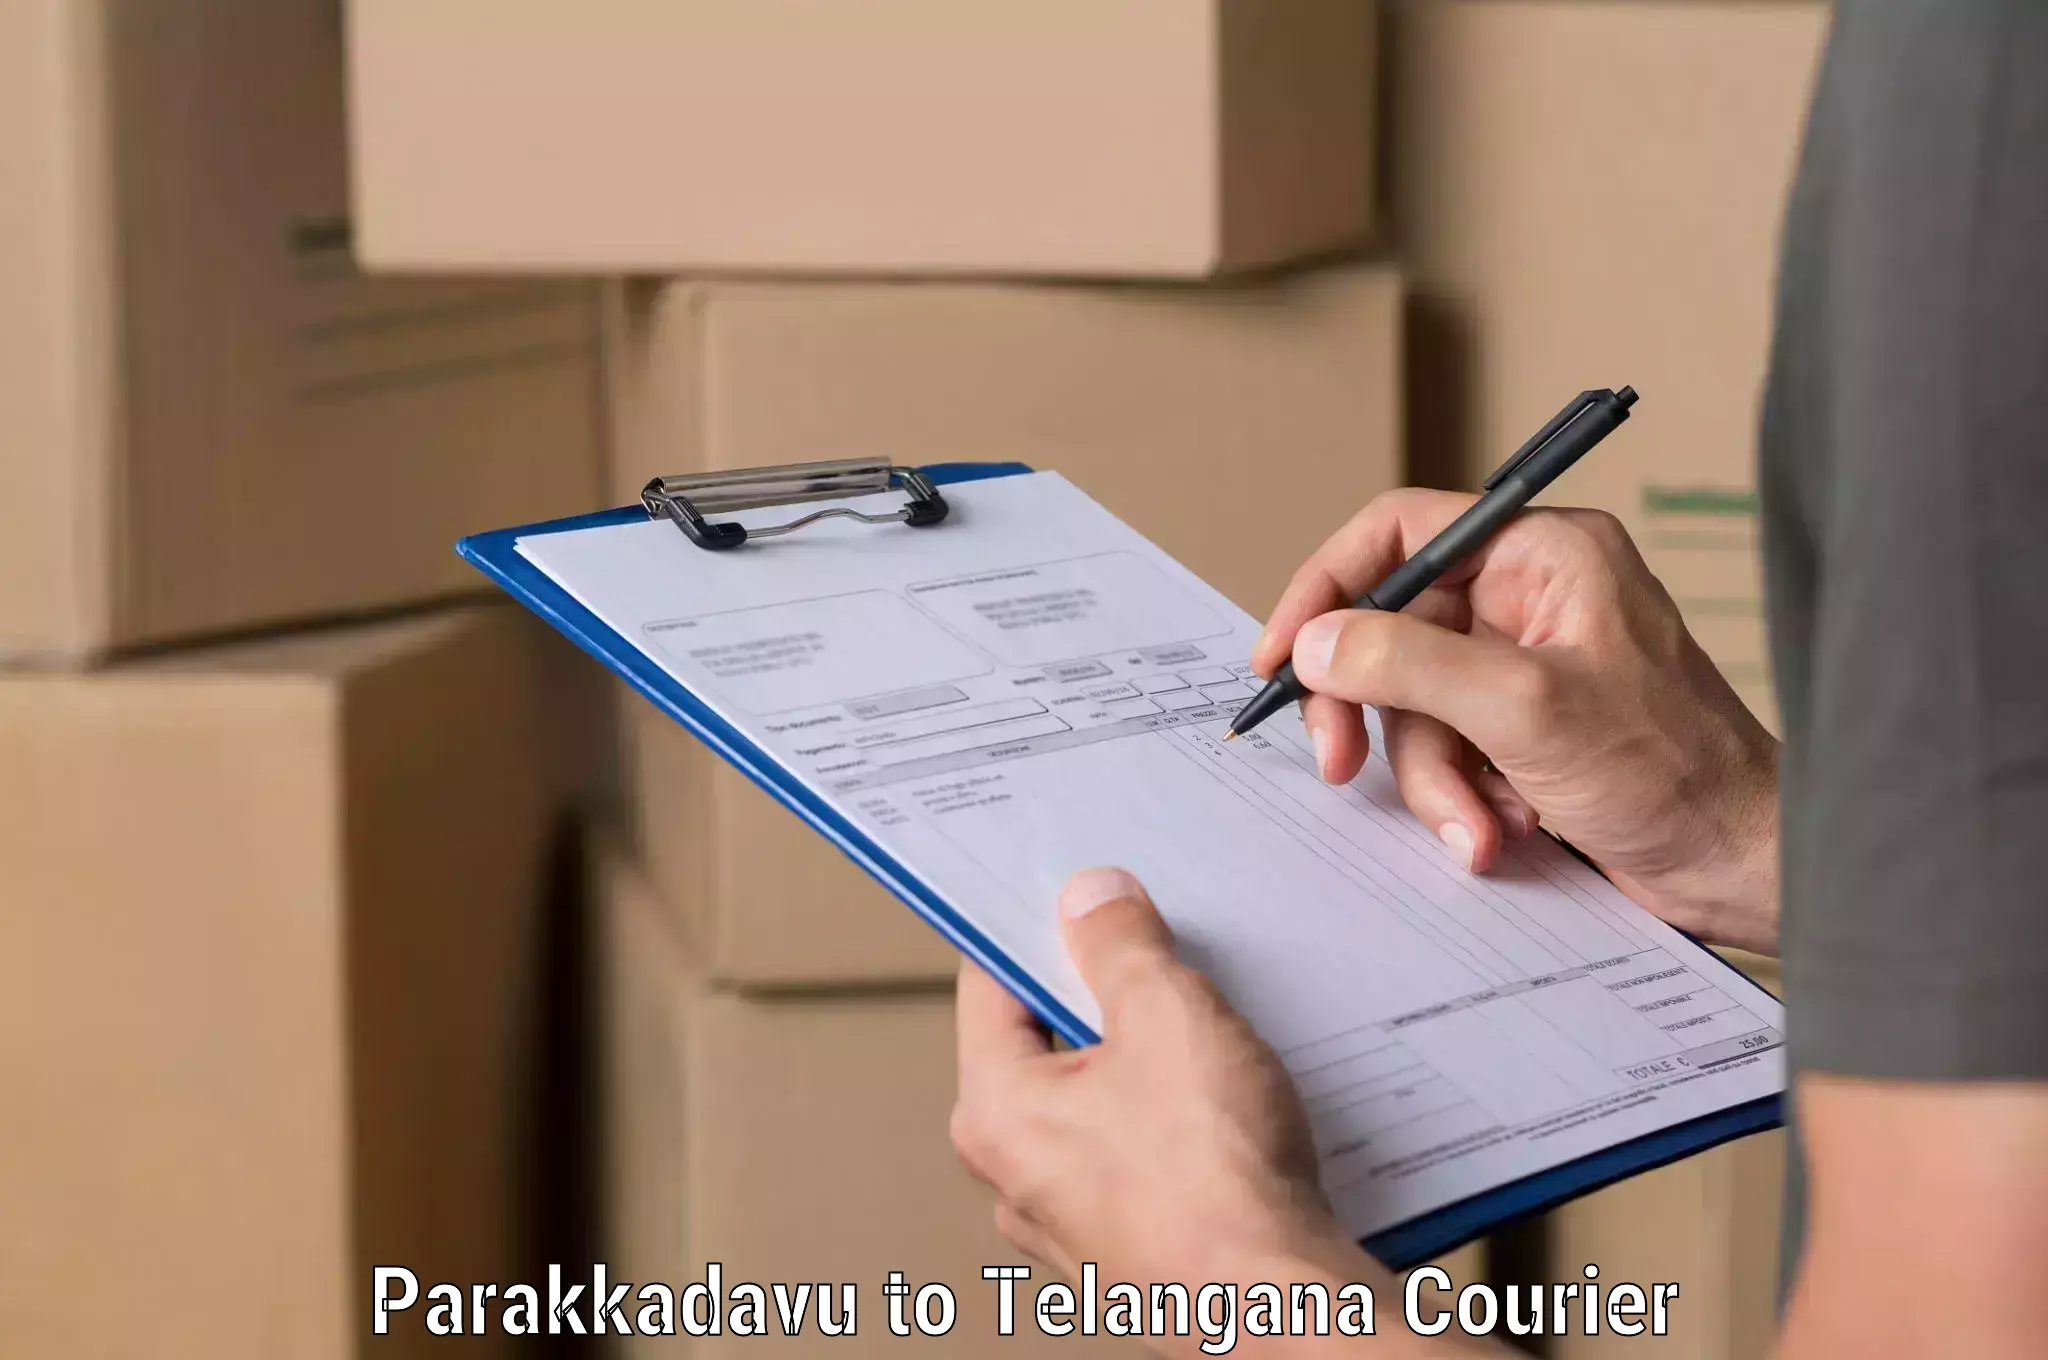 Affordable parcel service in Parakkadavu to Rudrangi